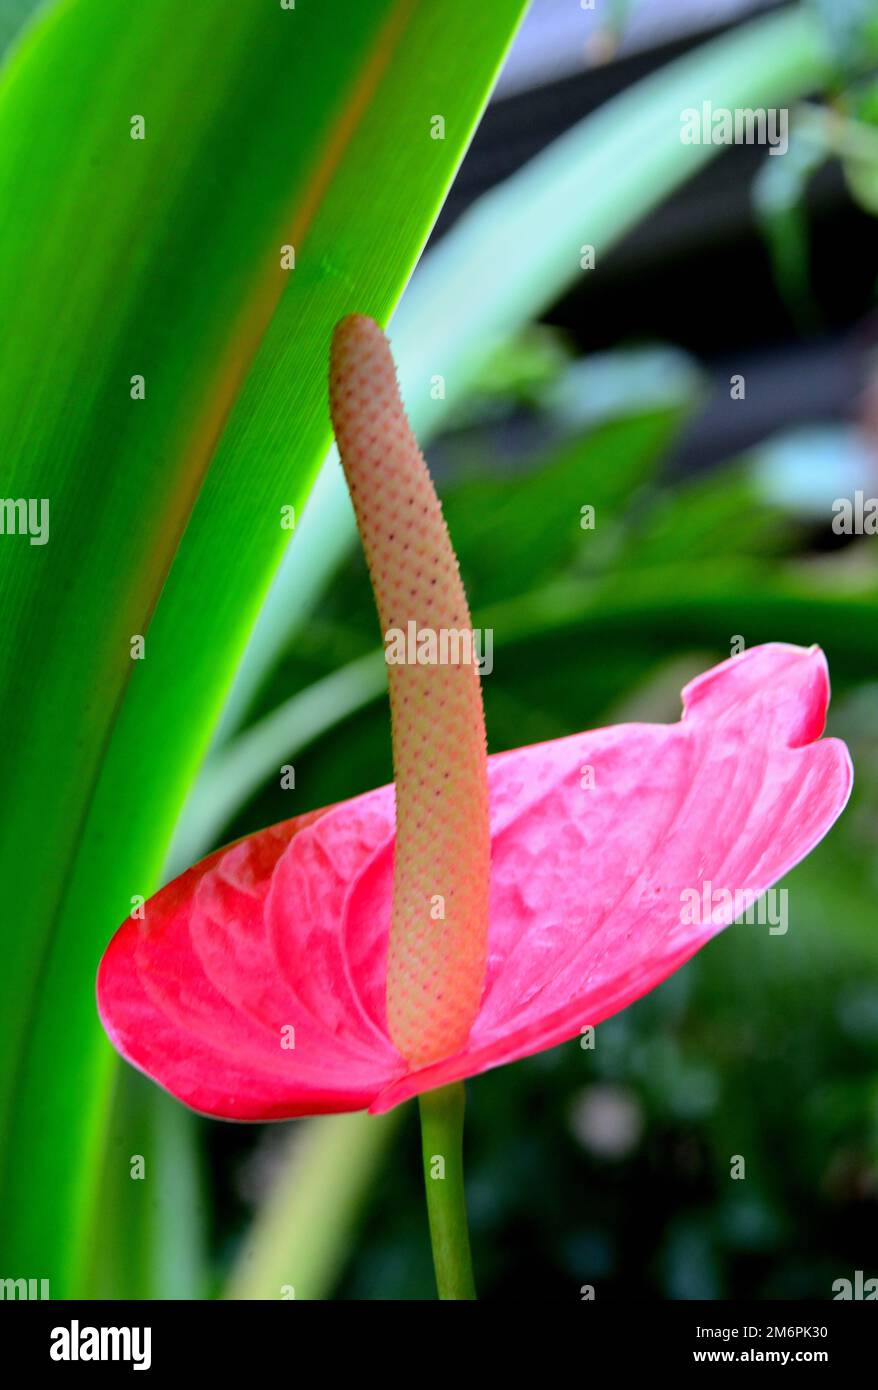 Anthuriumblume mit grünem Blatt Stockfoto